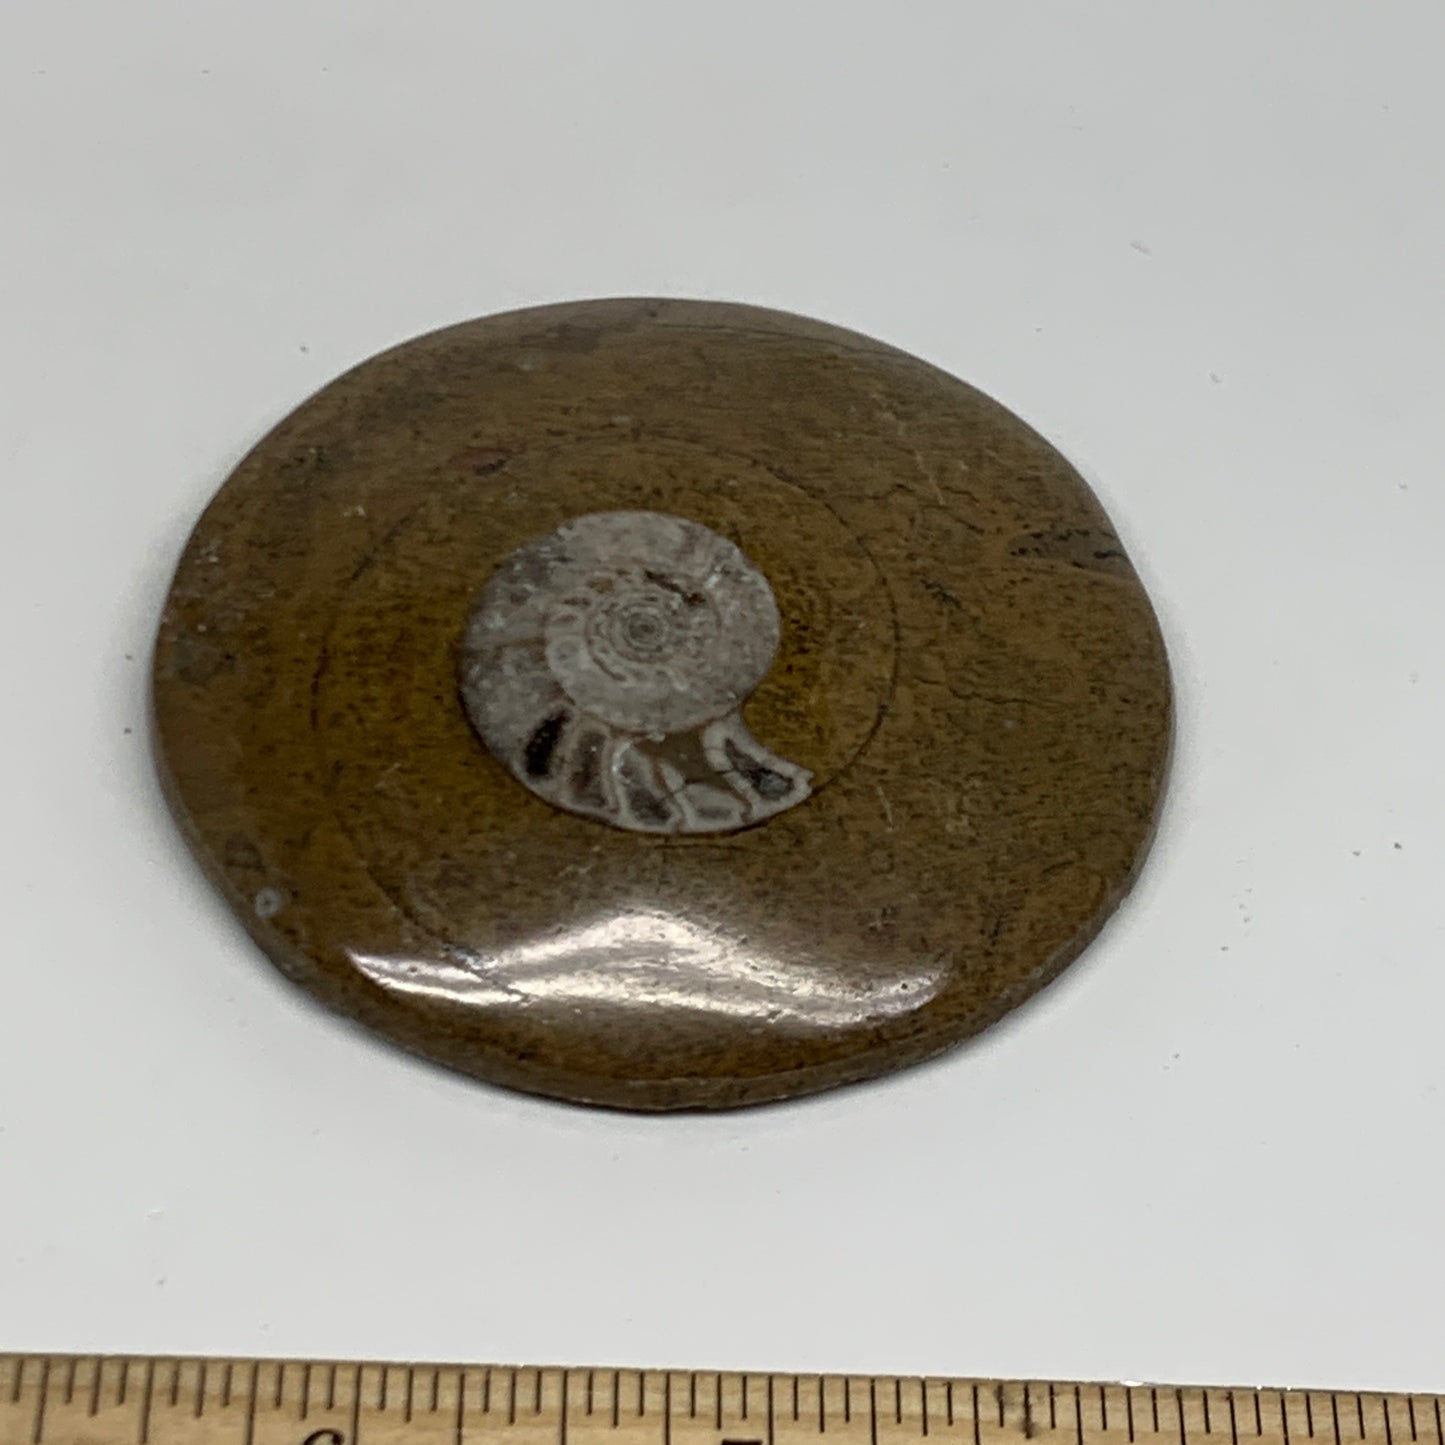 102.2g, 2.9"x2.9"x0.6", Goniatite (Button) Ammonite Polished Fossils, B30089